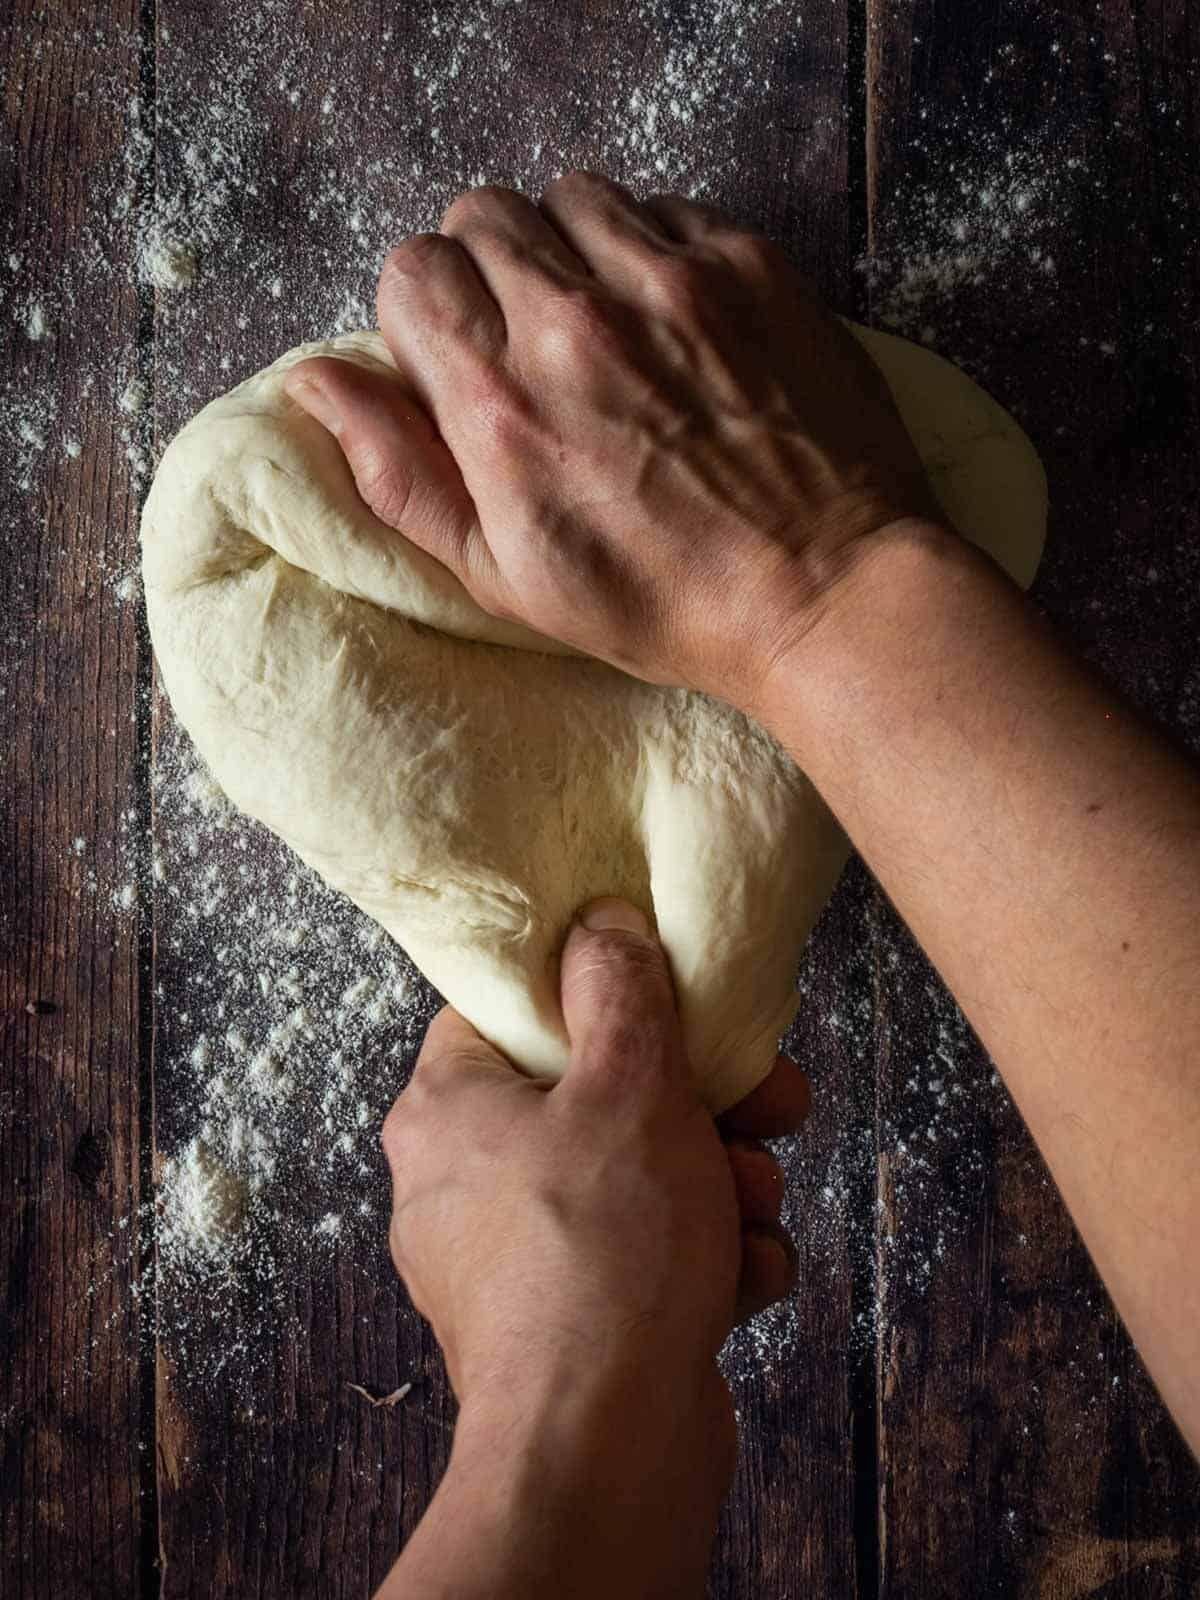 stretch the pagnotta bread dough.